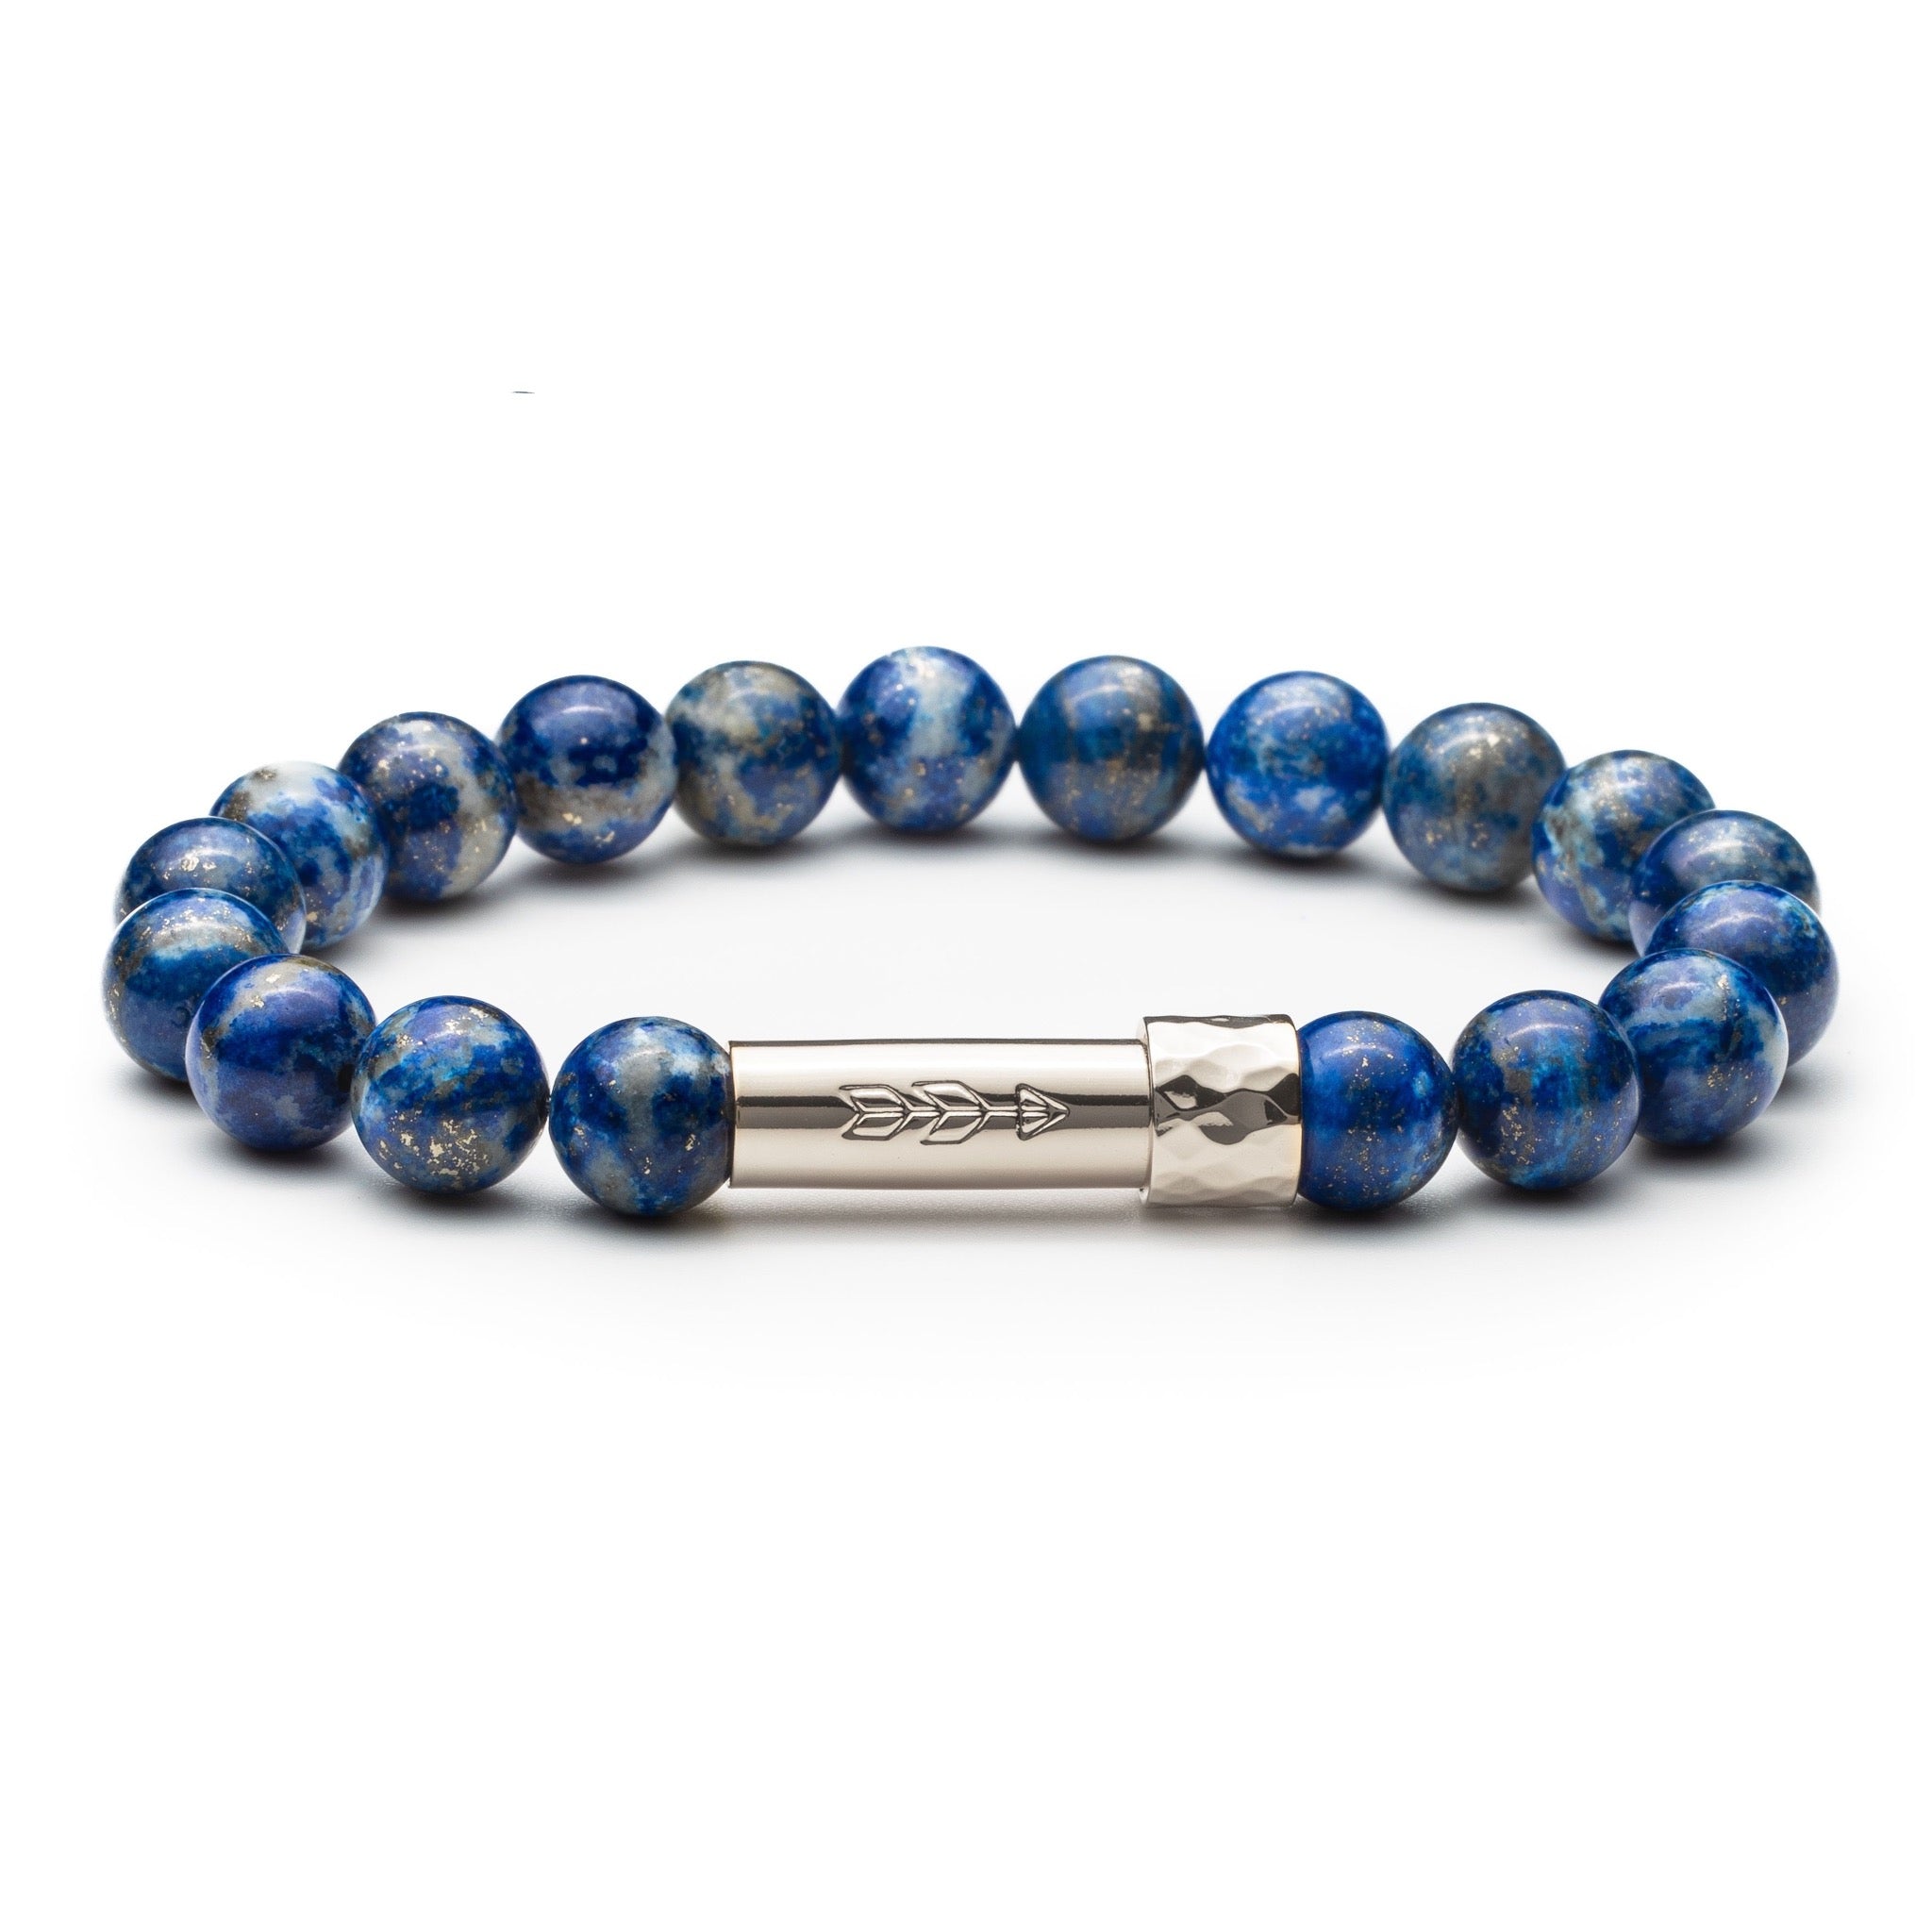 Mantra beads blue lapis lazuli silver